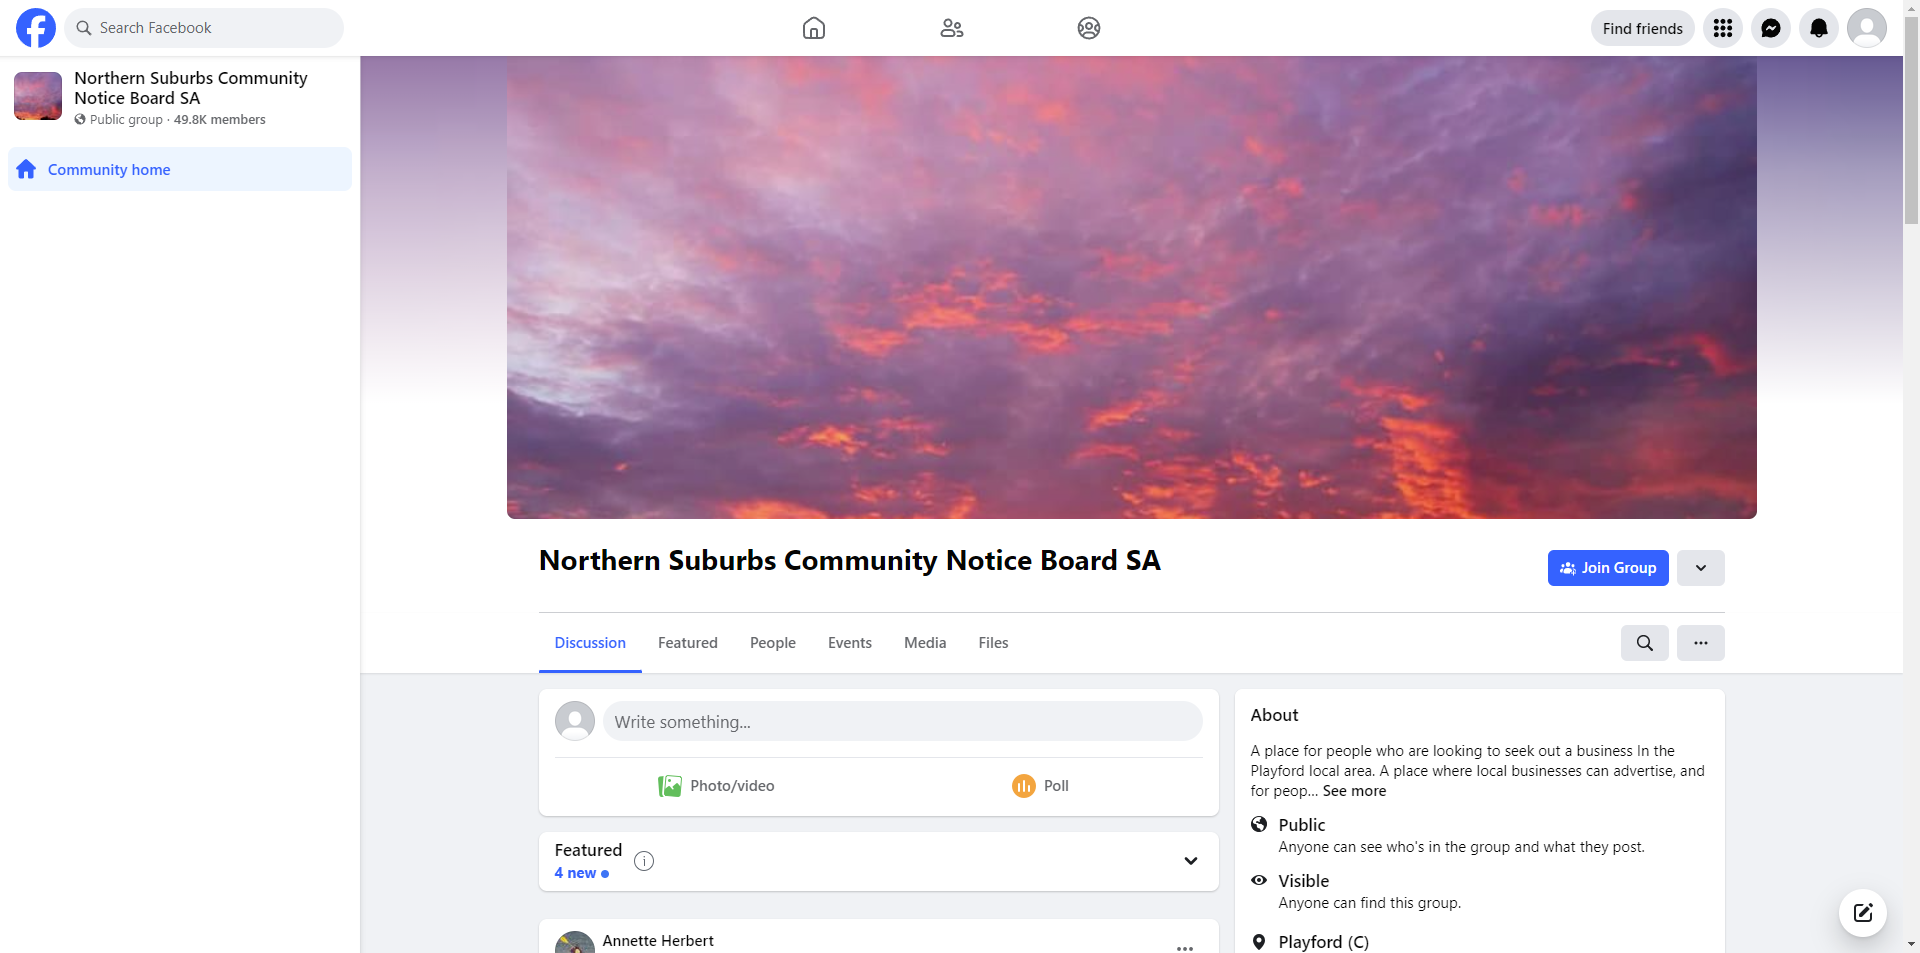 Northern Suburbs Community Notice Board SA